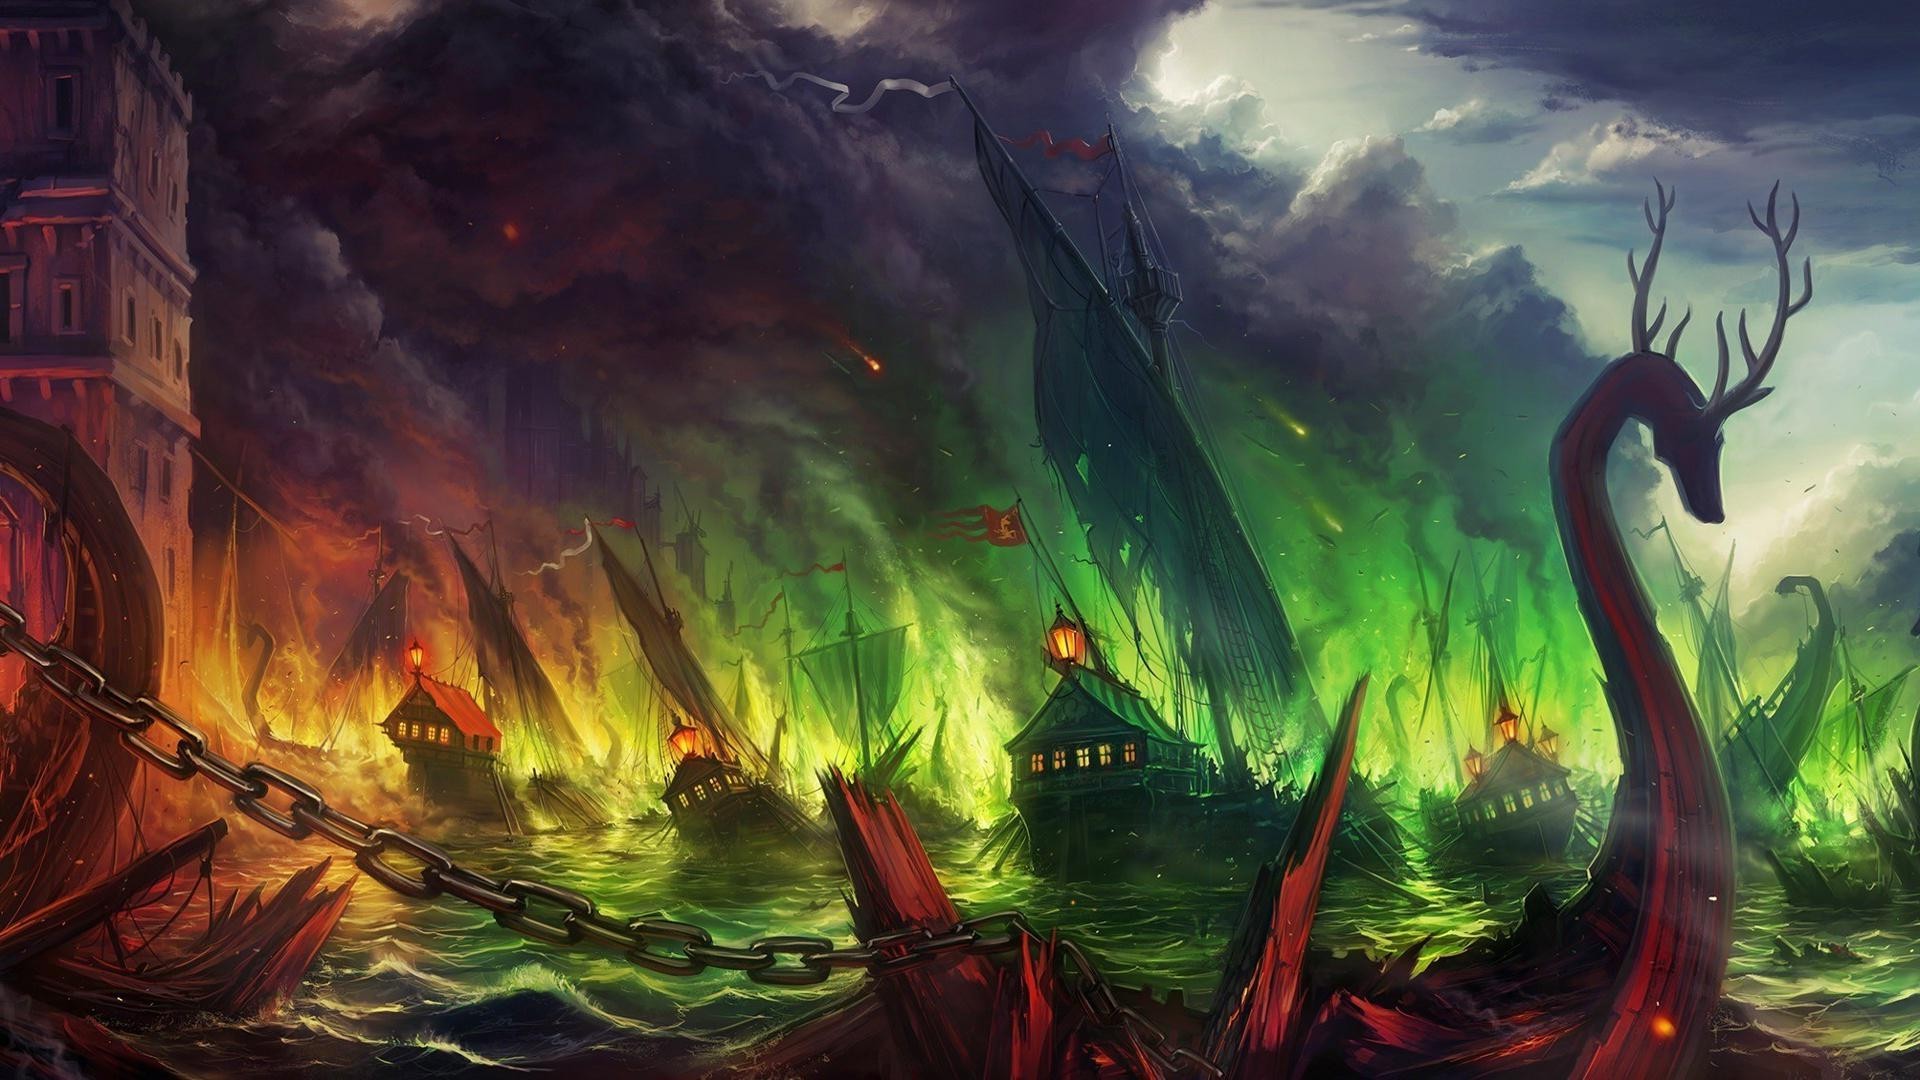 Game Of Thrones, War, Ship, Sinking Ships, Fire, Blackwater, Kings Landing, Artwork, Fantasy Art, Concept Art, Sea, Clouds, Smoke Wallpaper